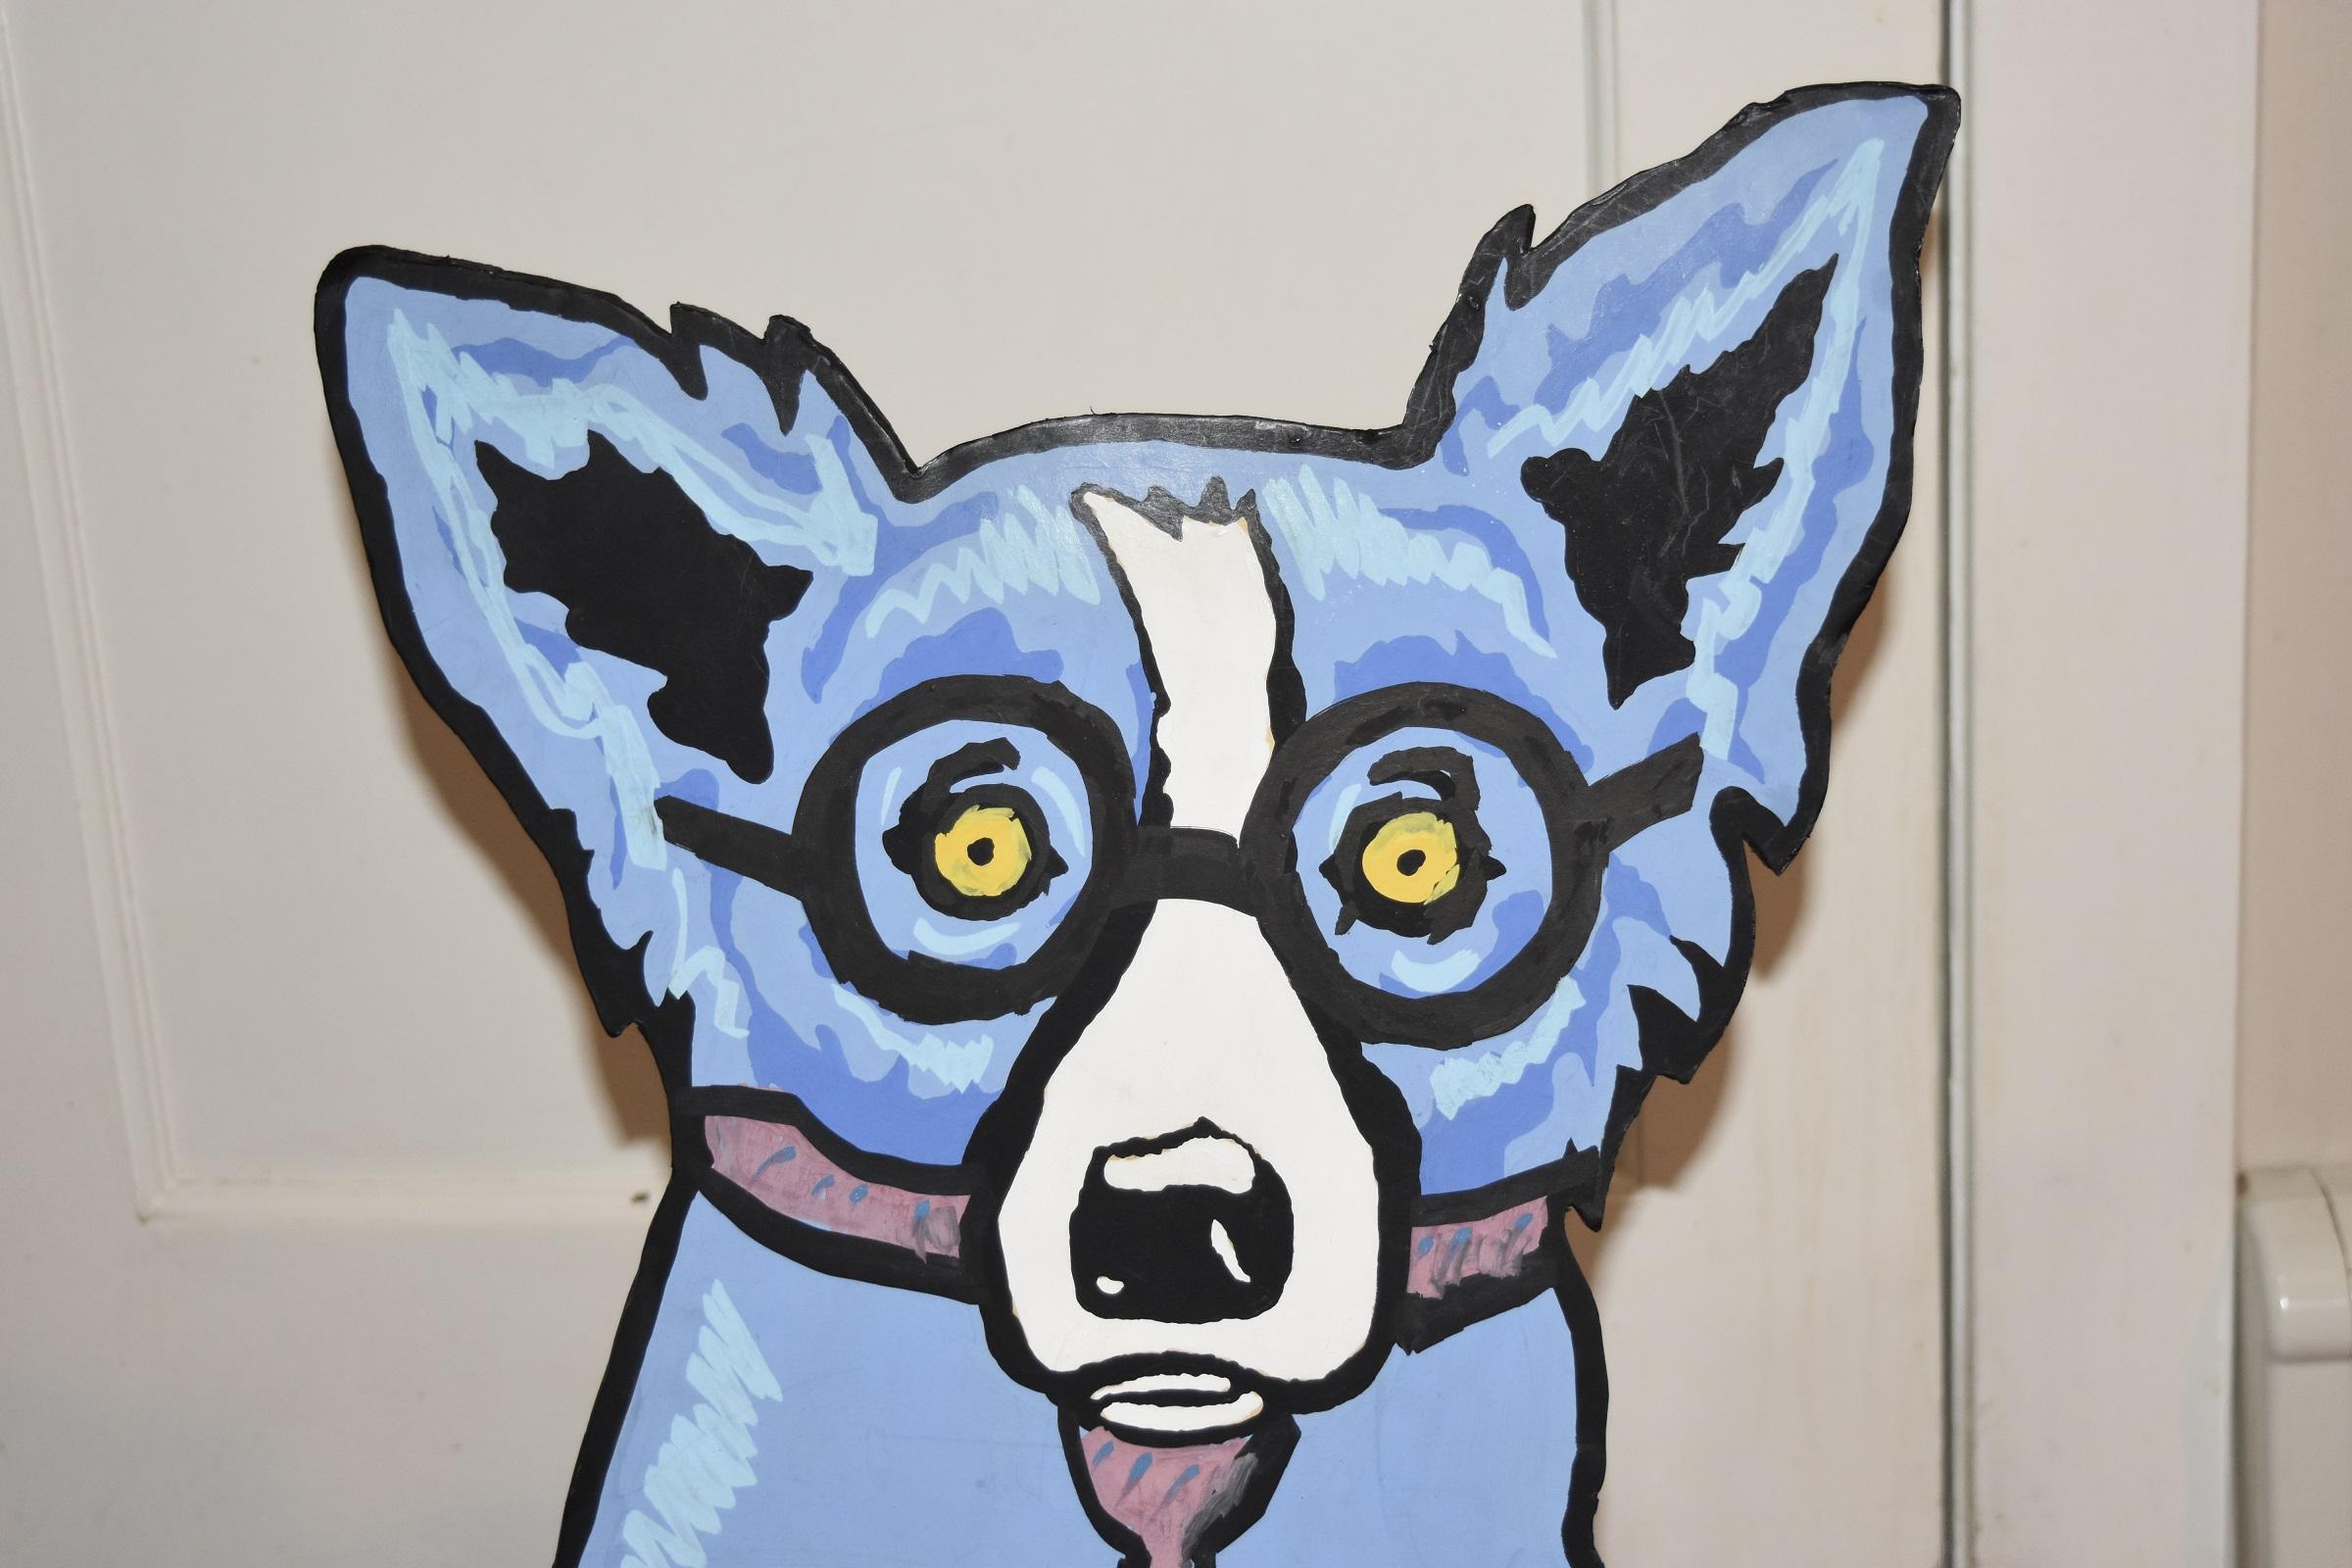 Original - Untitled Blue Dog Sculpture on Foamboard 3